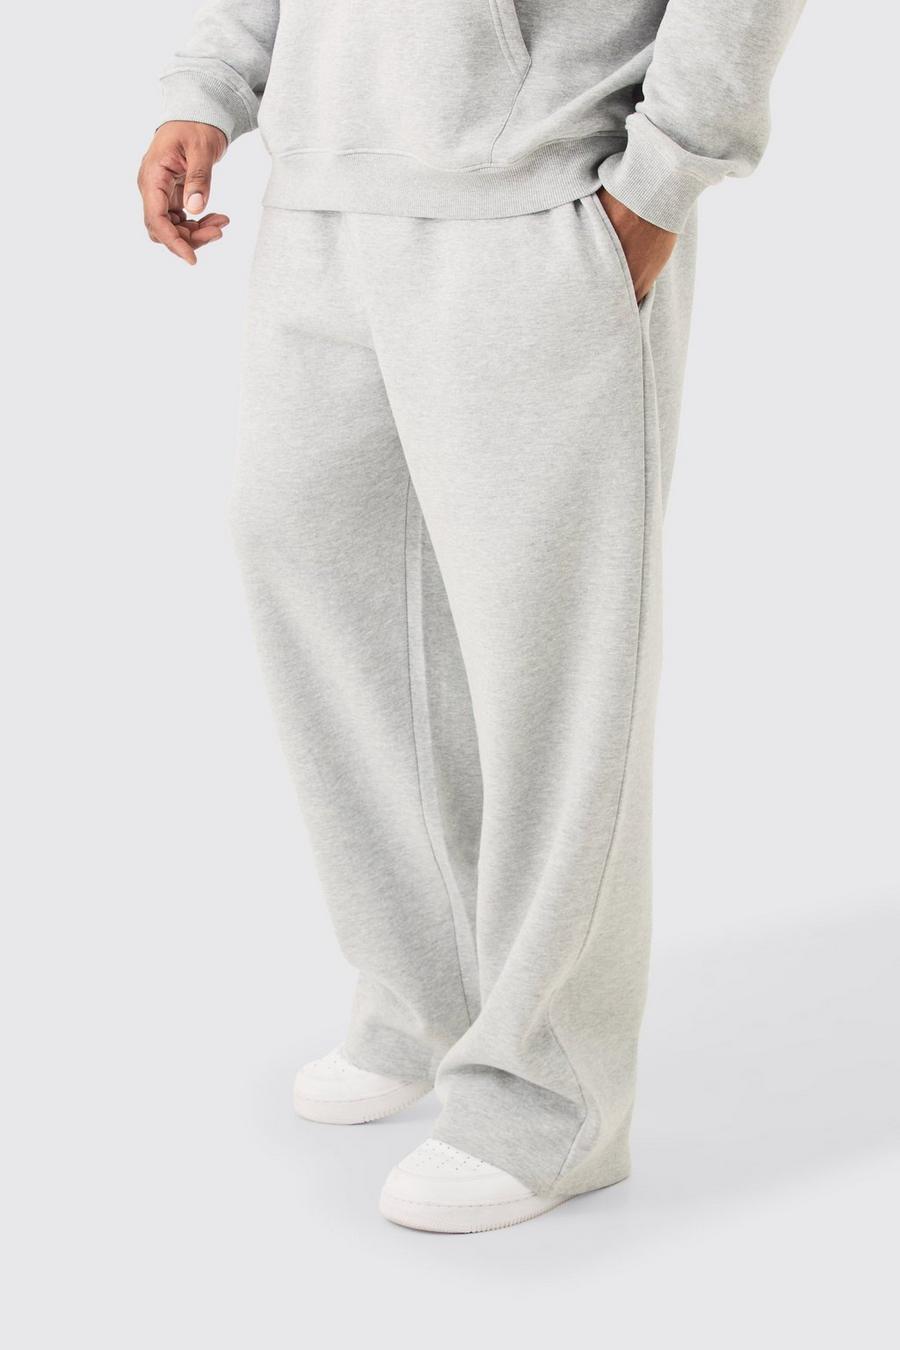 Pantaloni tuta Plus Size Basic rilassati in mélange grigio, Grey marl